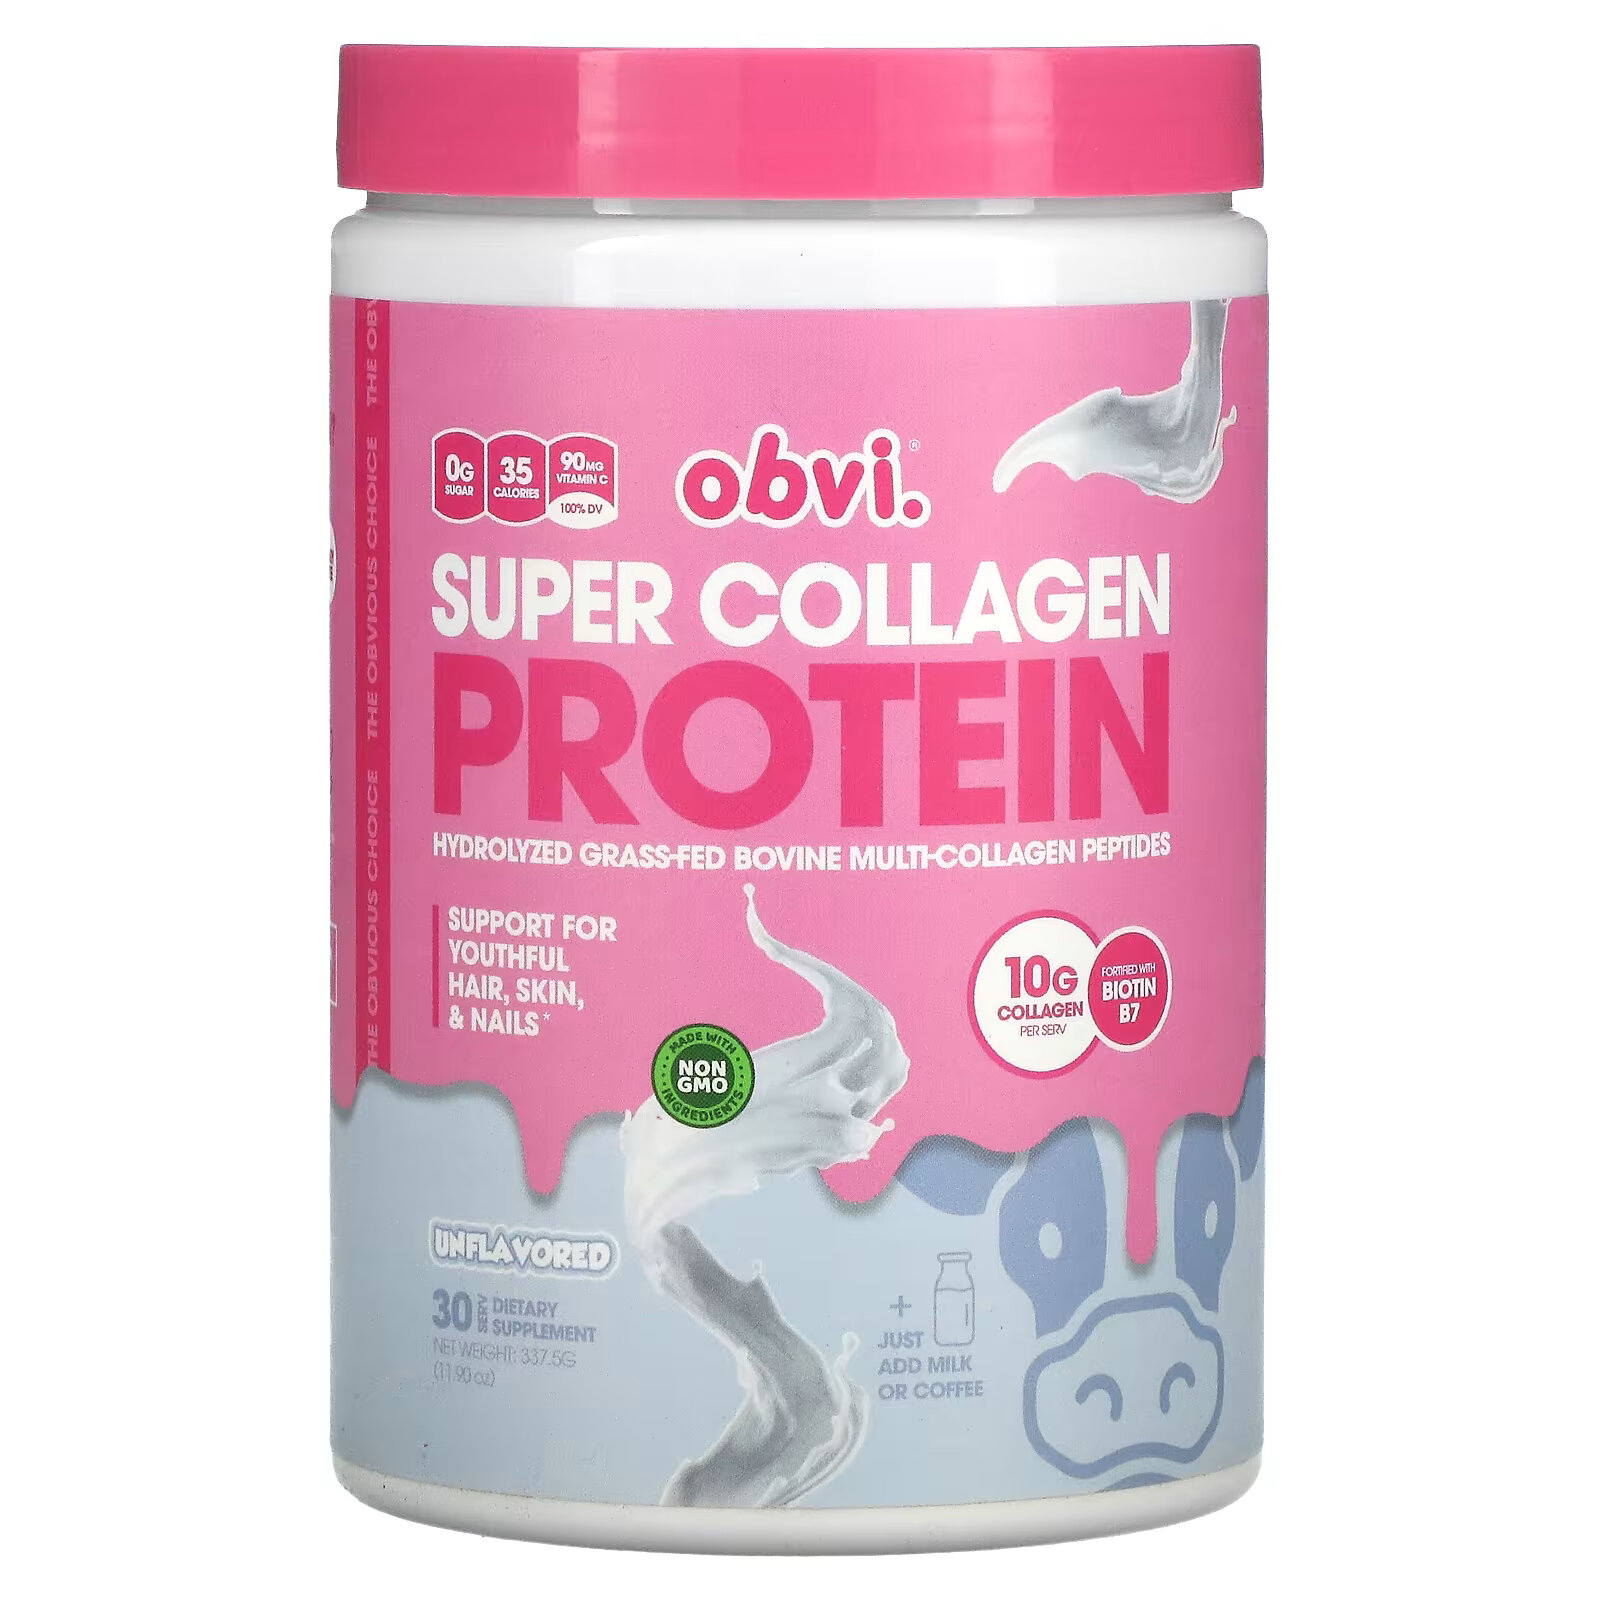 Obvi, Super Collagen Protein, без добавок, 337,5 г (11,90 унции) obvi super collagen protein entenmann s 384 г 13 54 унции